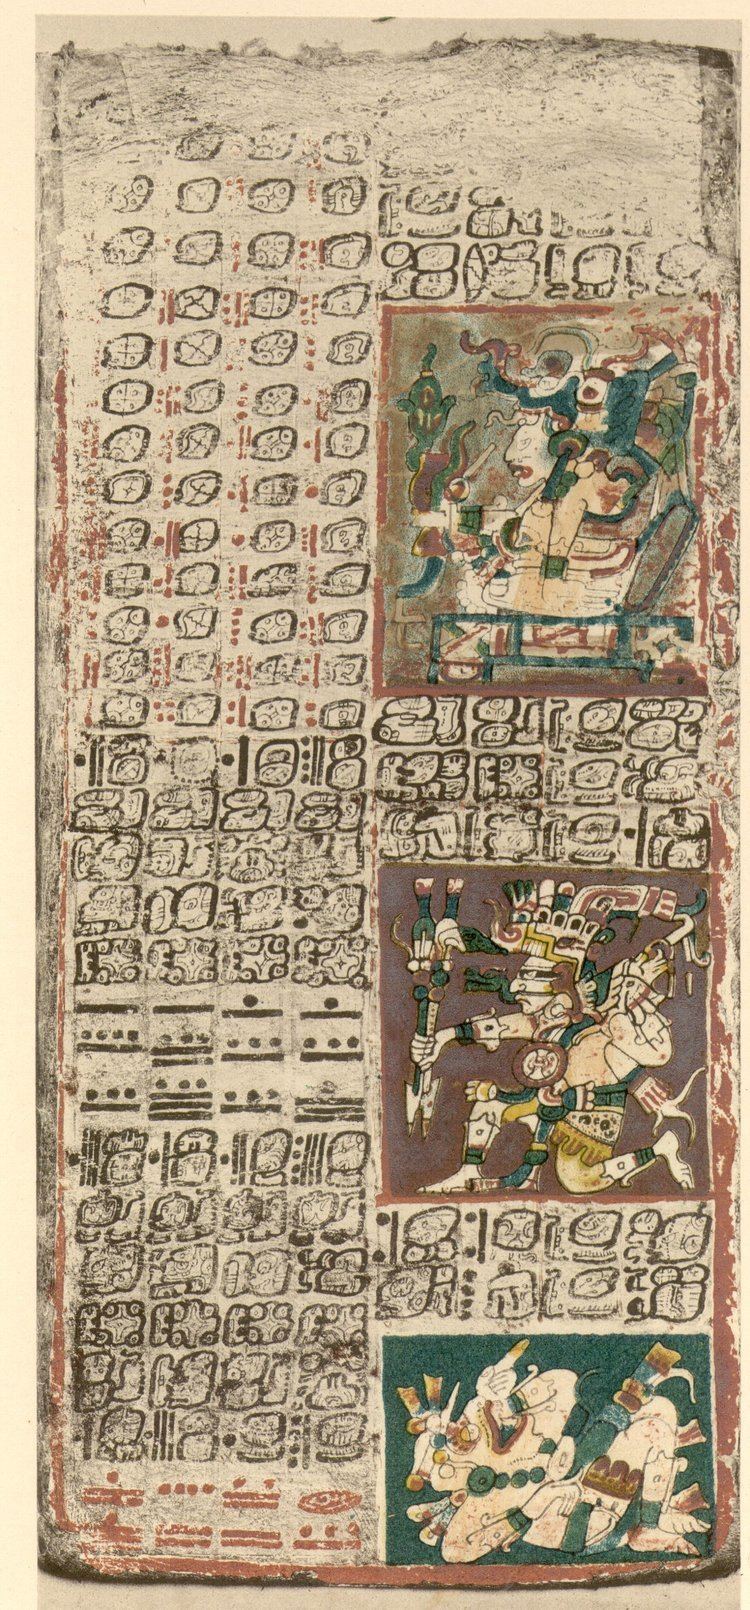 Dresden Codex httpssmediacacheak0pinimgcomoriginalsb4